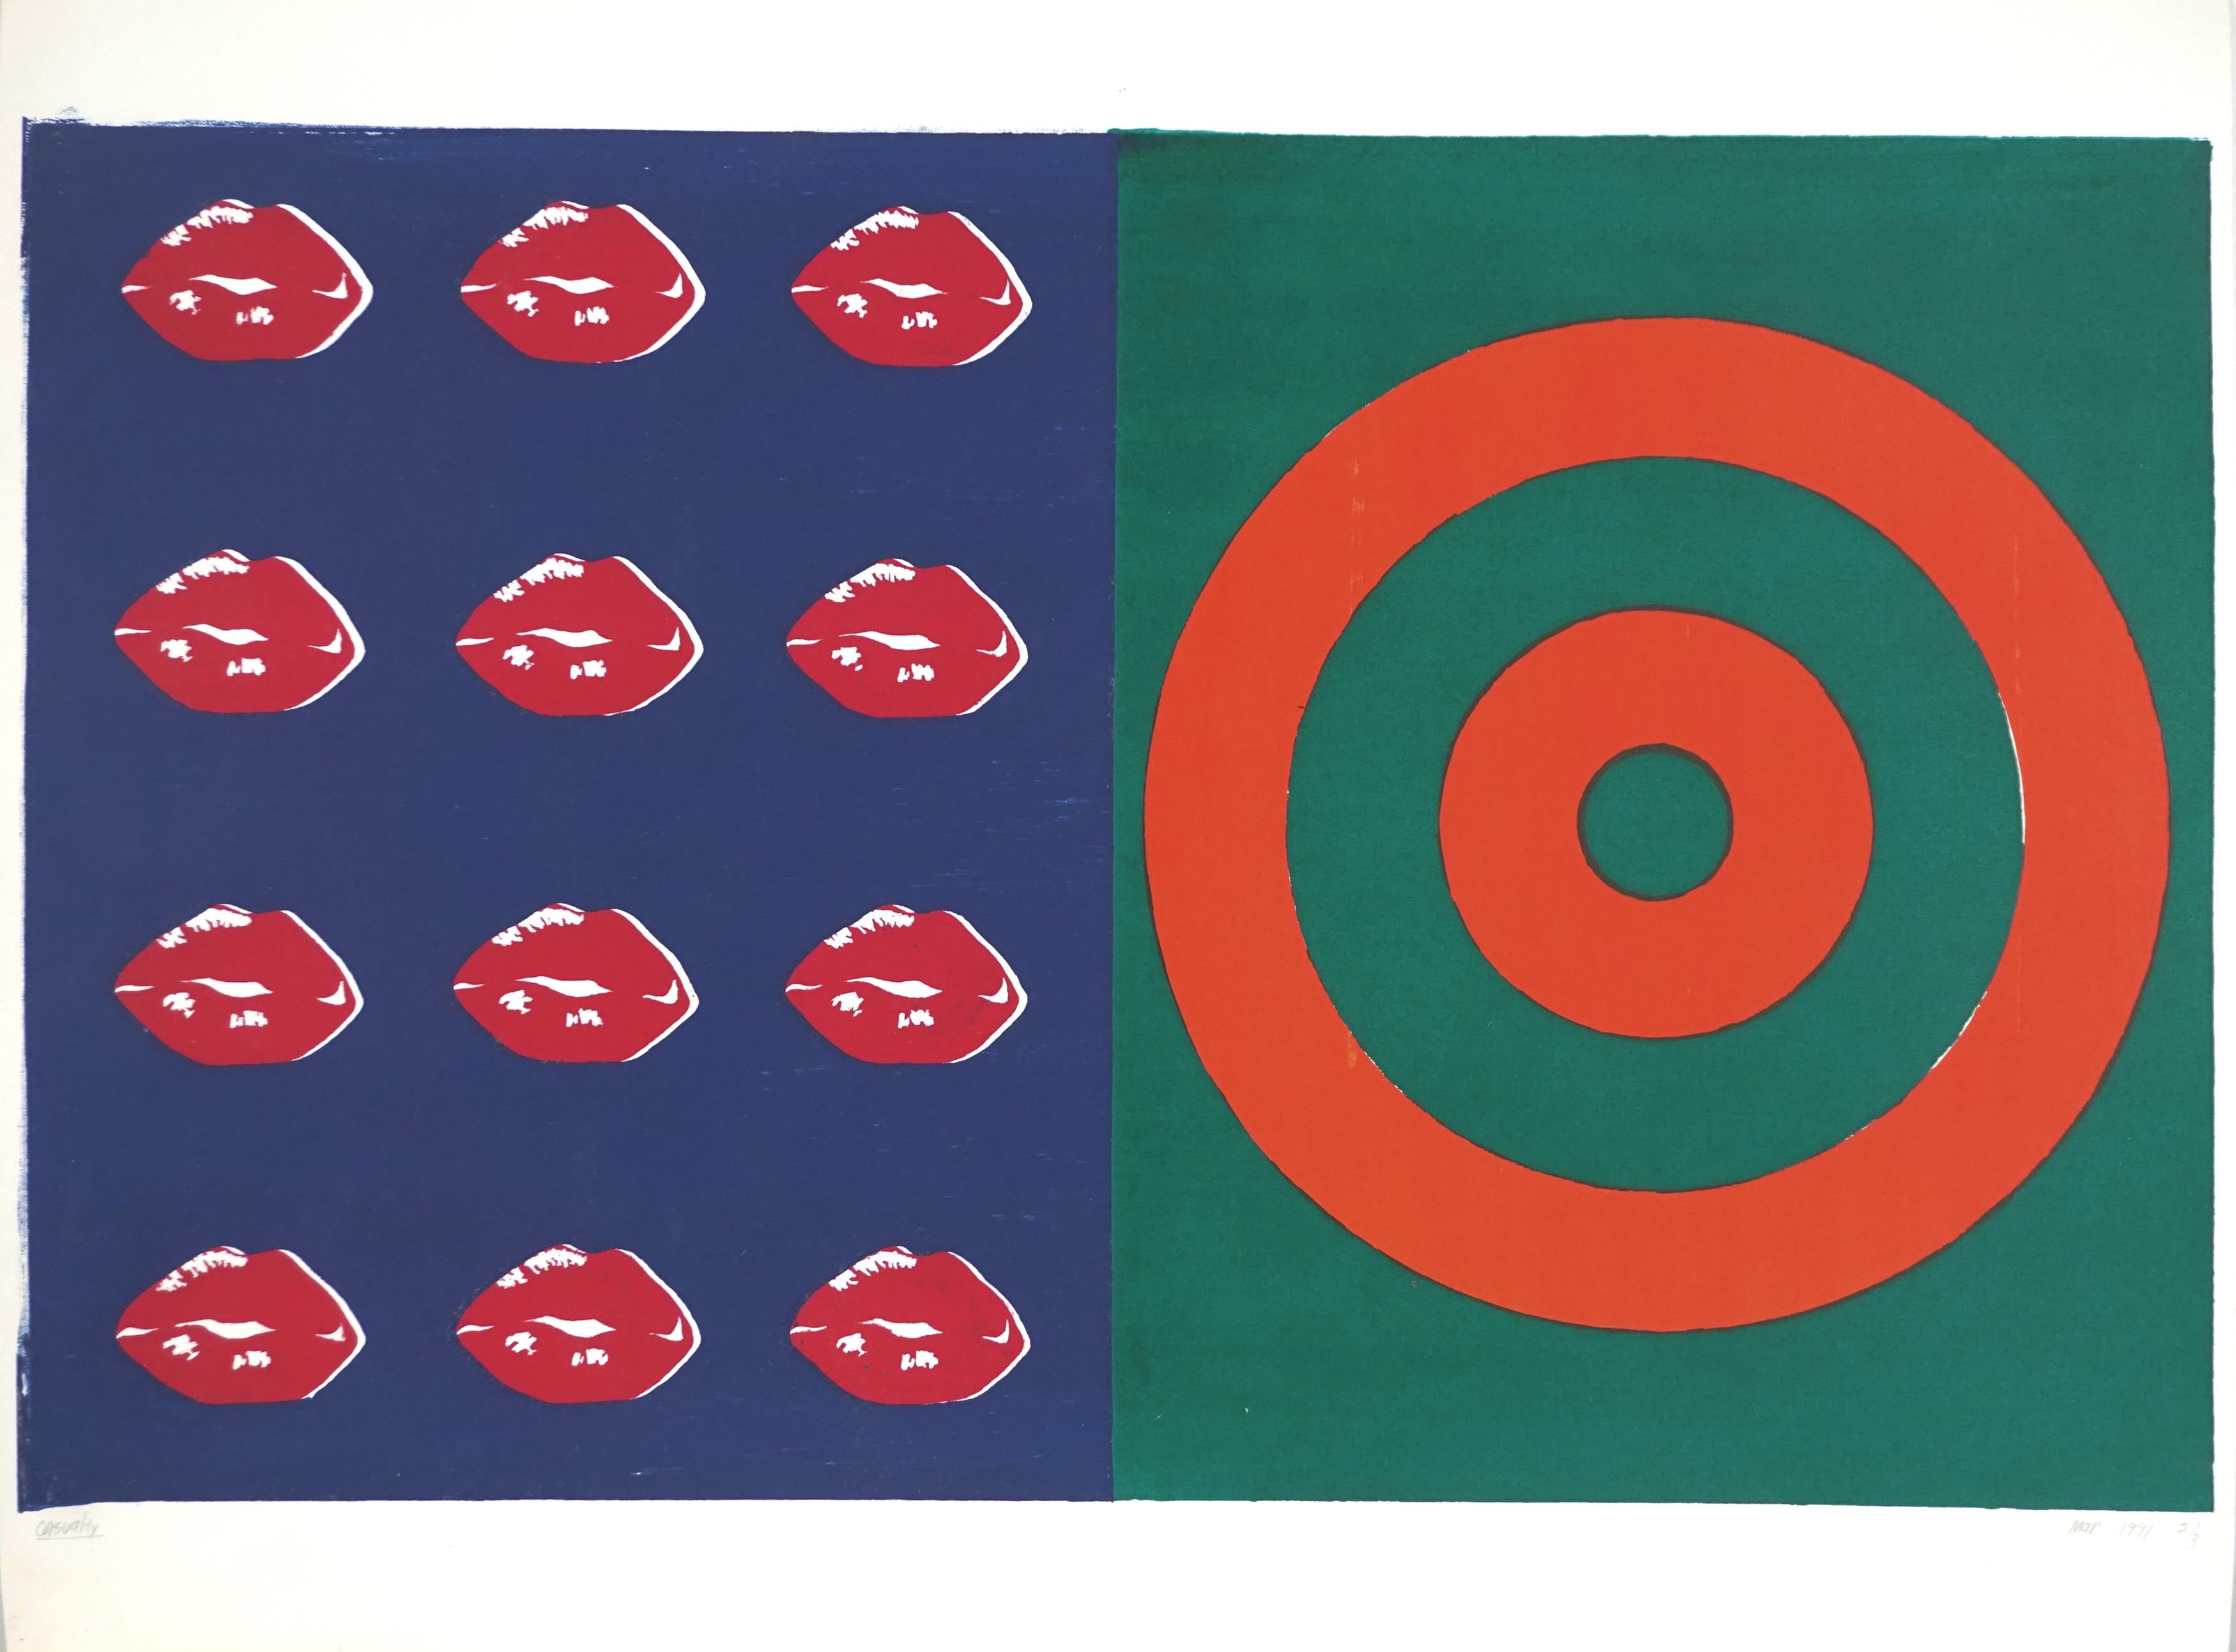 David Mar Abstract Print - "Casualty" Pop Art Homage to Andy Warhol Silkscreen 2/3